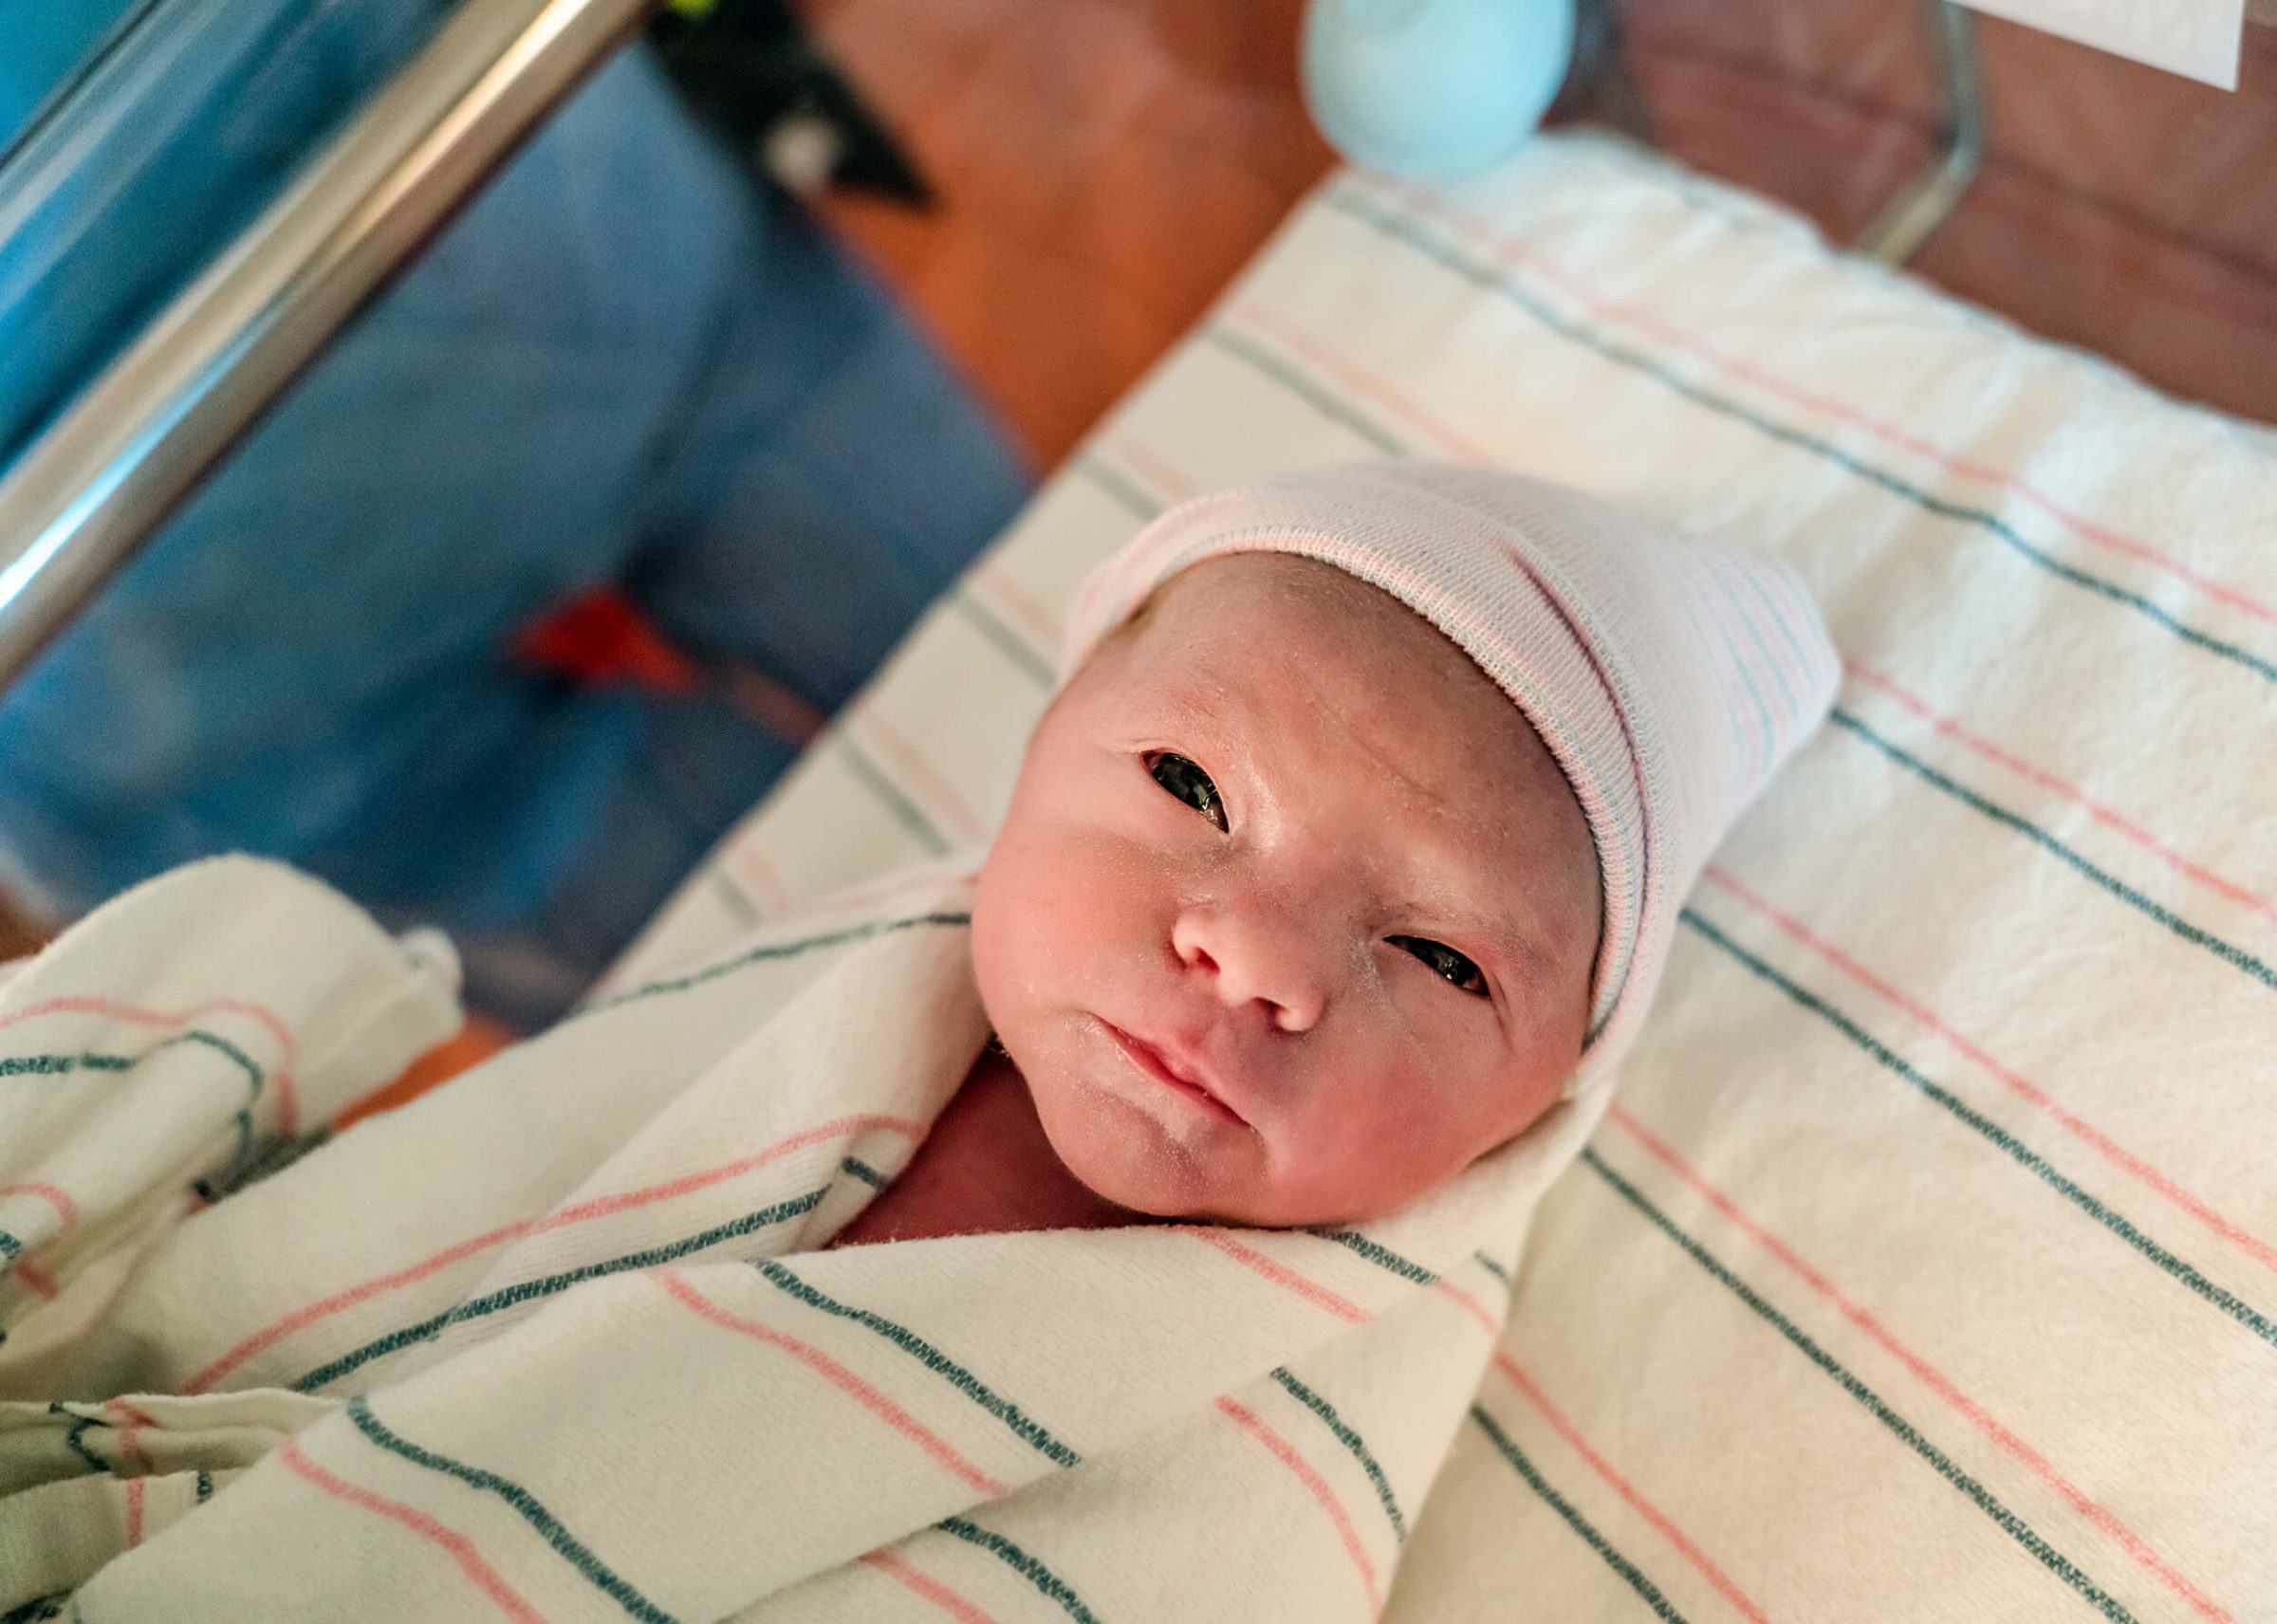 infant swaddled in bedside crib at the hospital